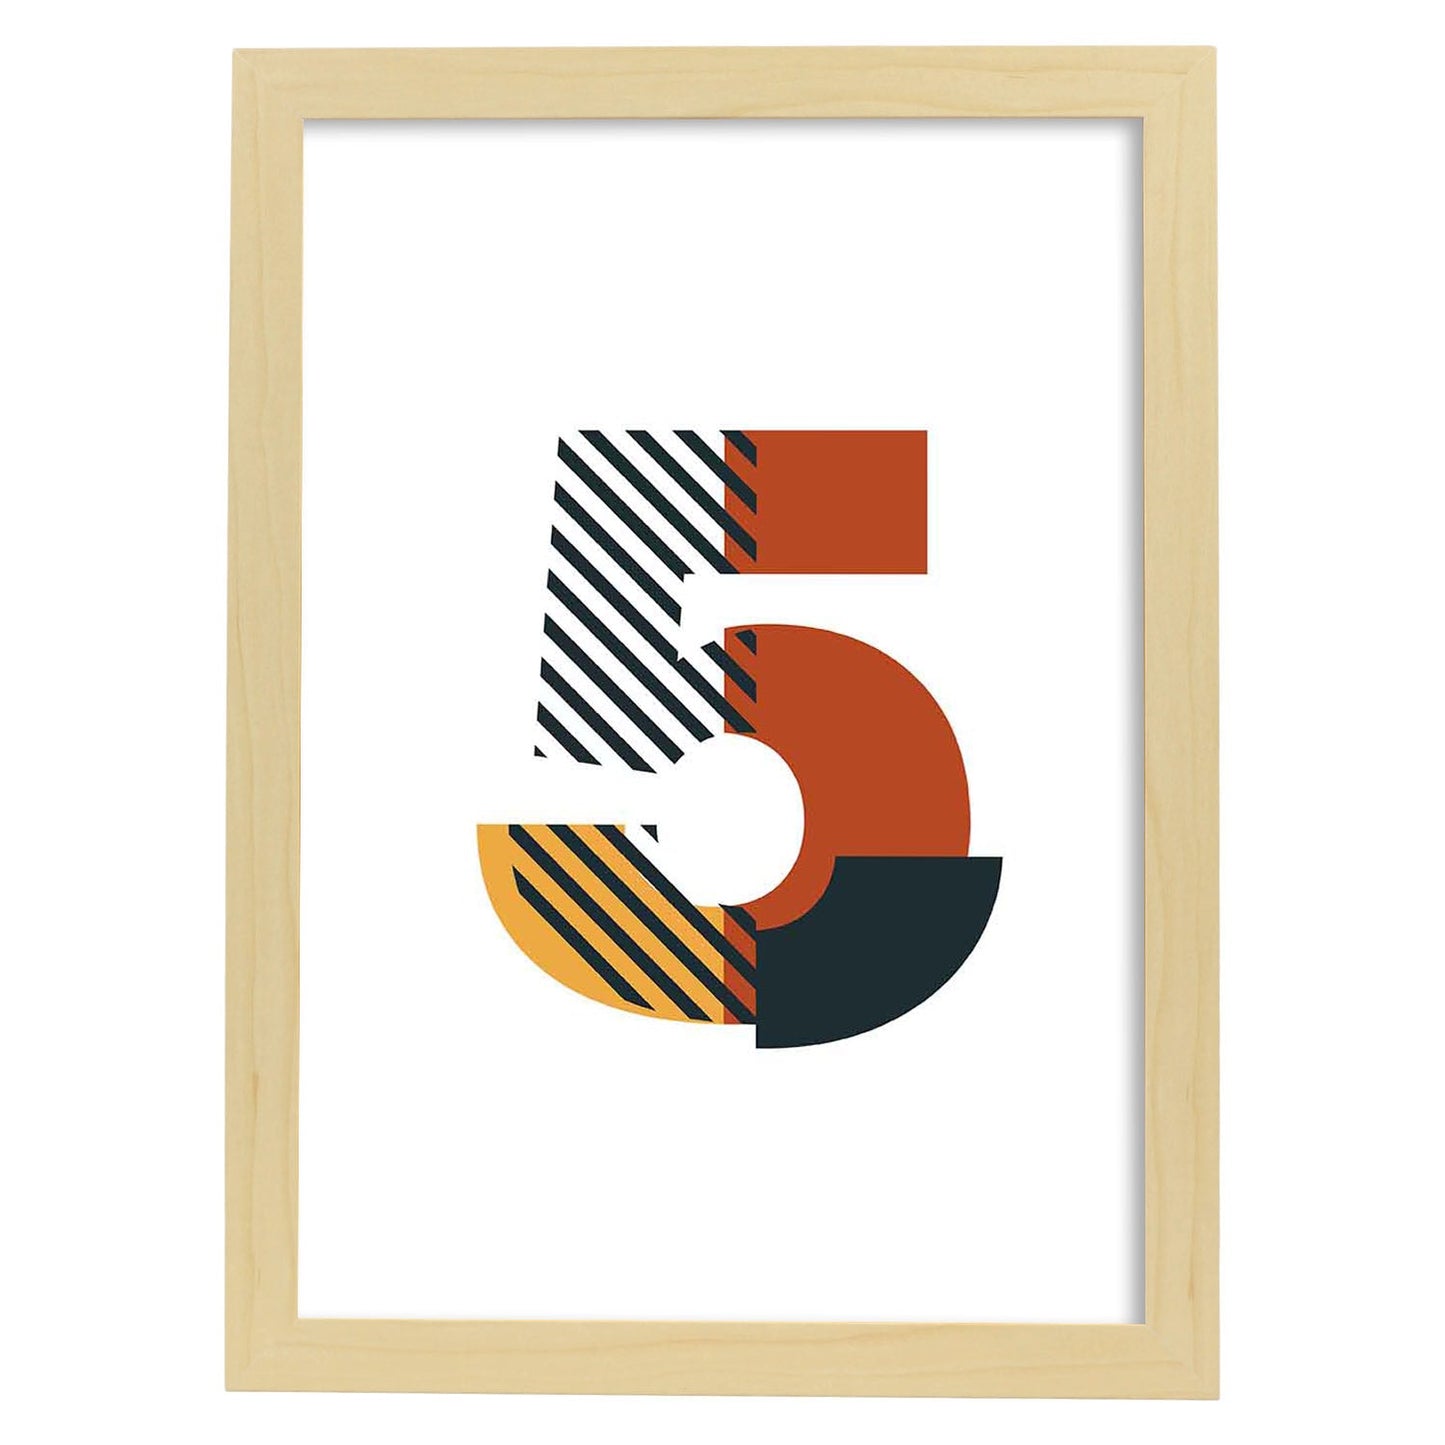 Poster de número 5. Lámina estilo Geometria con imágenes del alfabeto.-Artwork-Nacnic-A4-Marco Madera clara-Nacnic Estudio SL